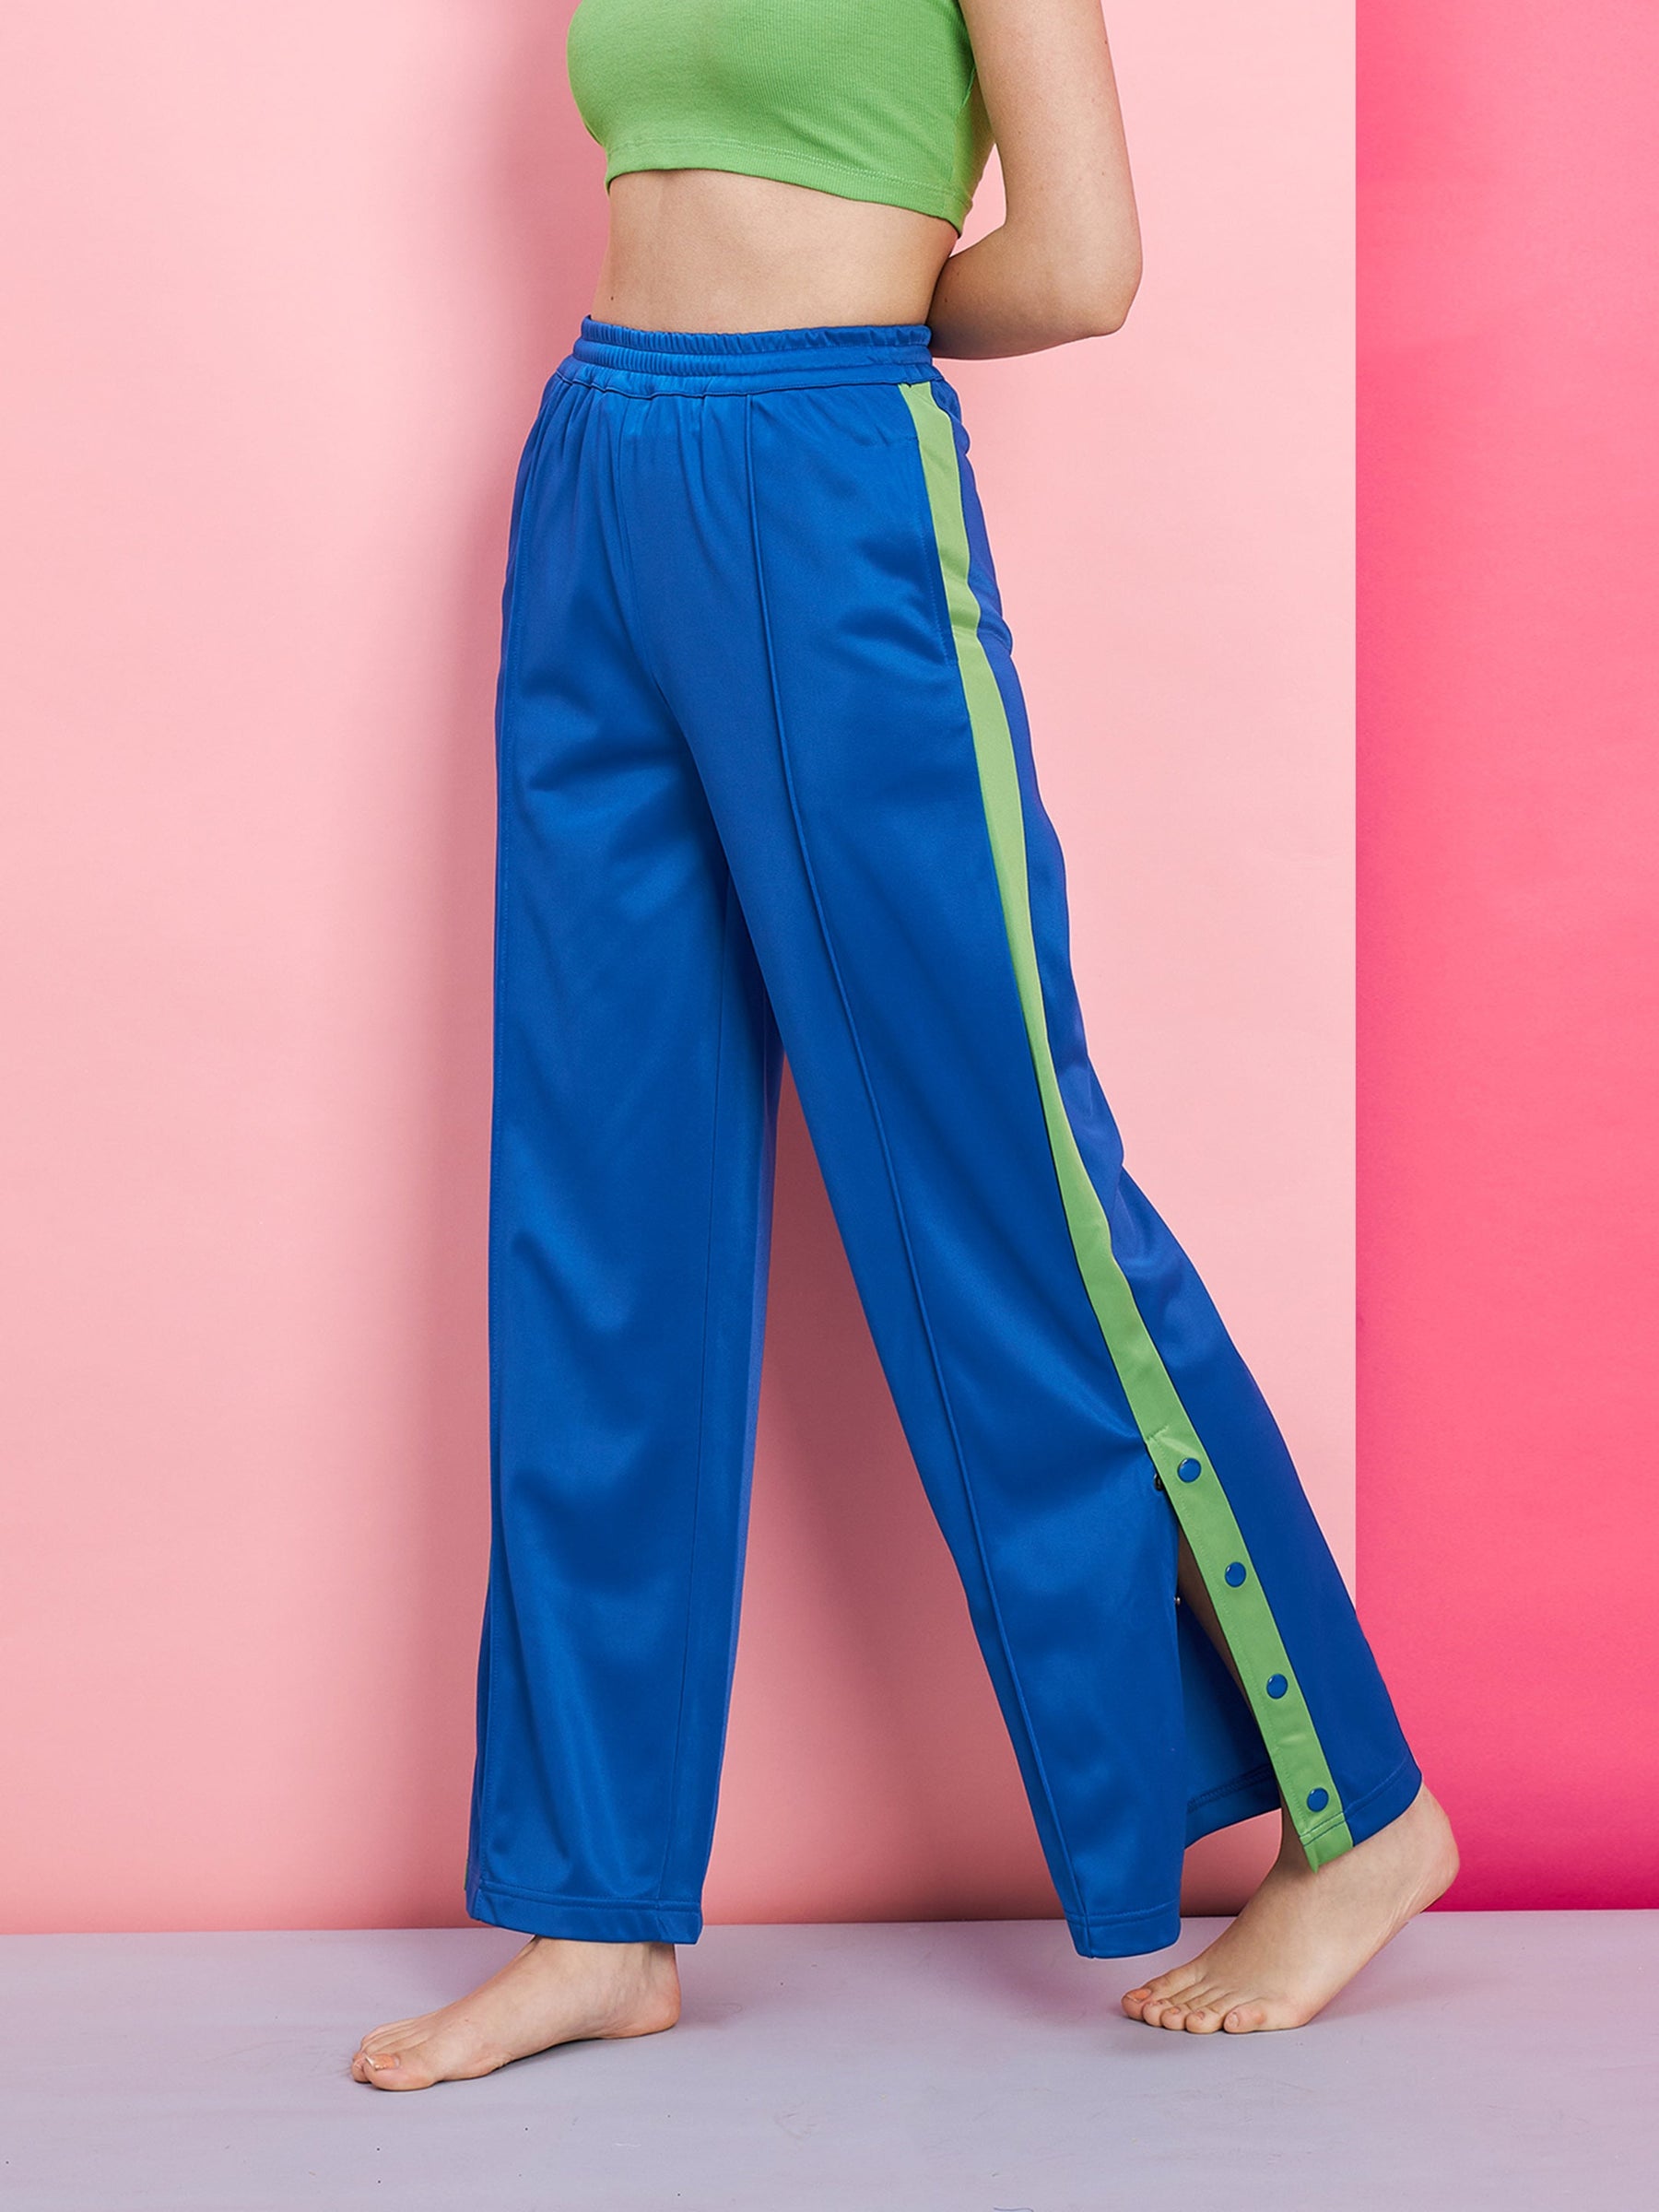 Buy Leebonee Women Regular fit Polyester Solid Track pants - Orange Online  at 25% off. |Paytm Mall